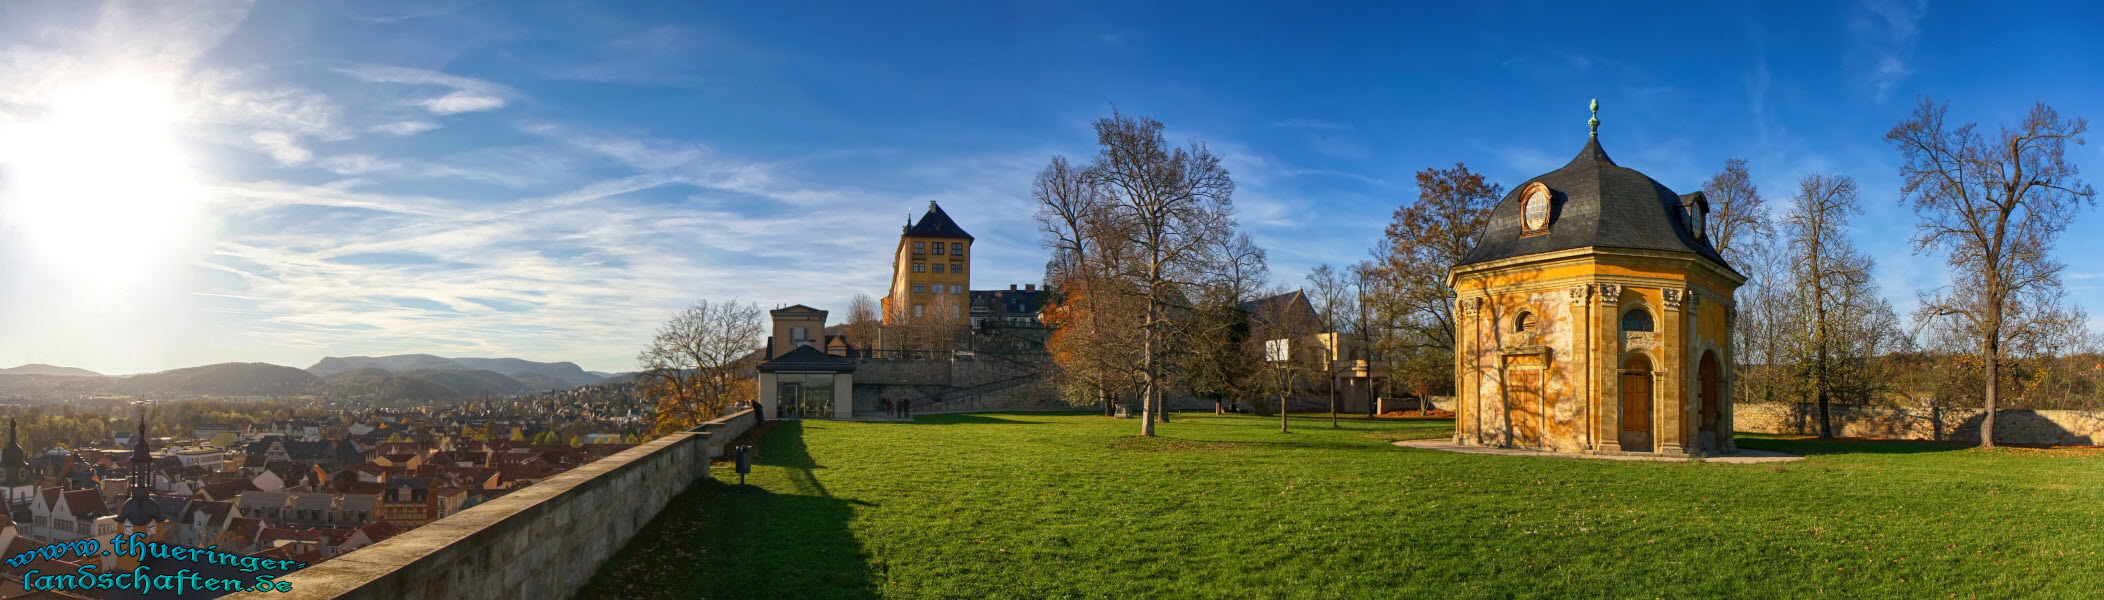 Schlo Heidecksburg Panorama